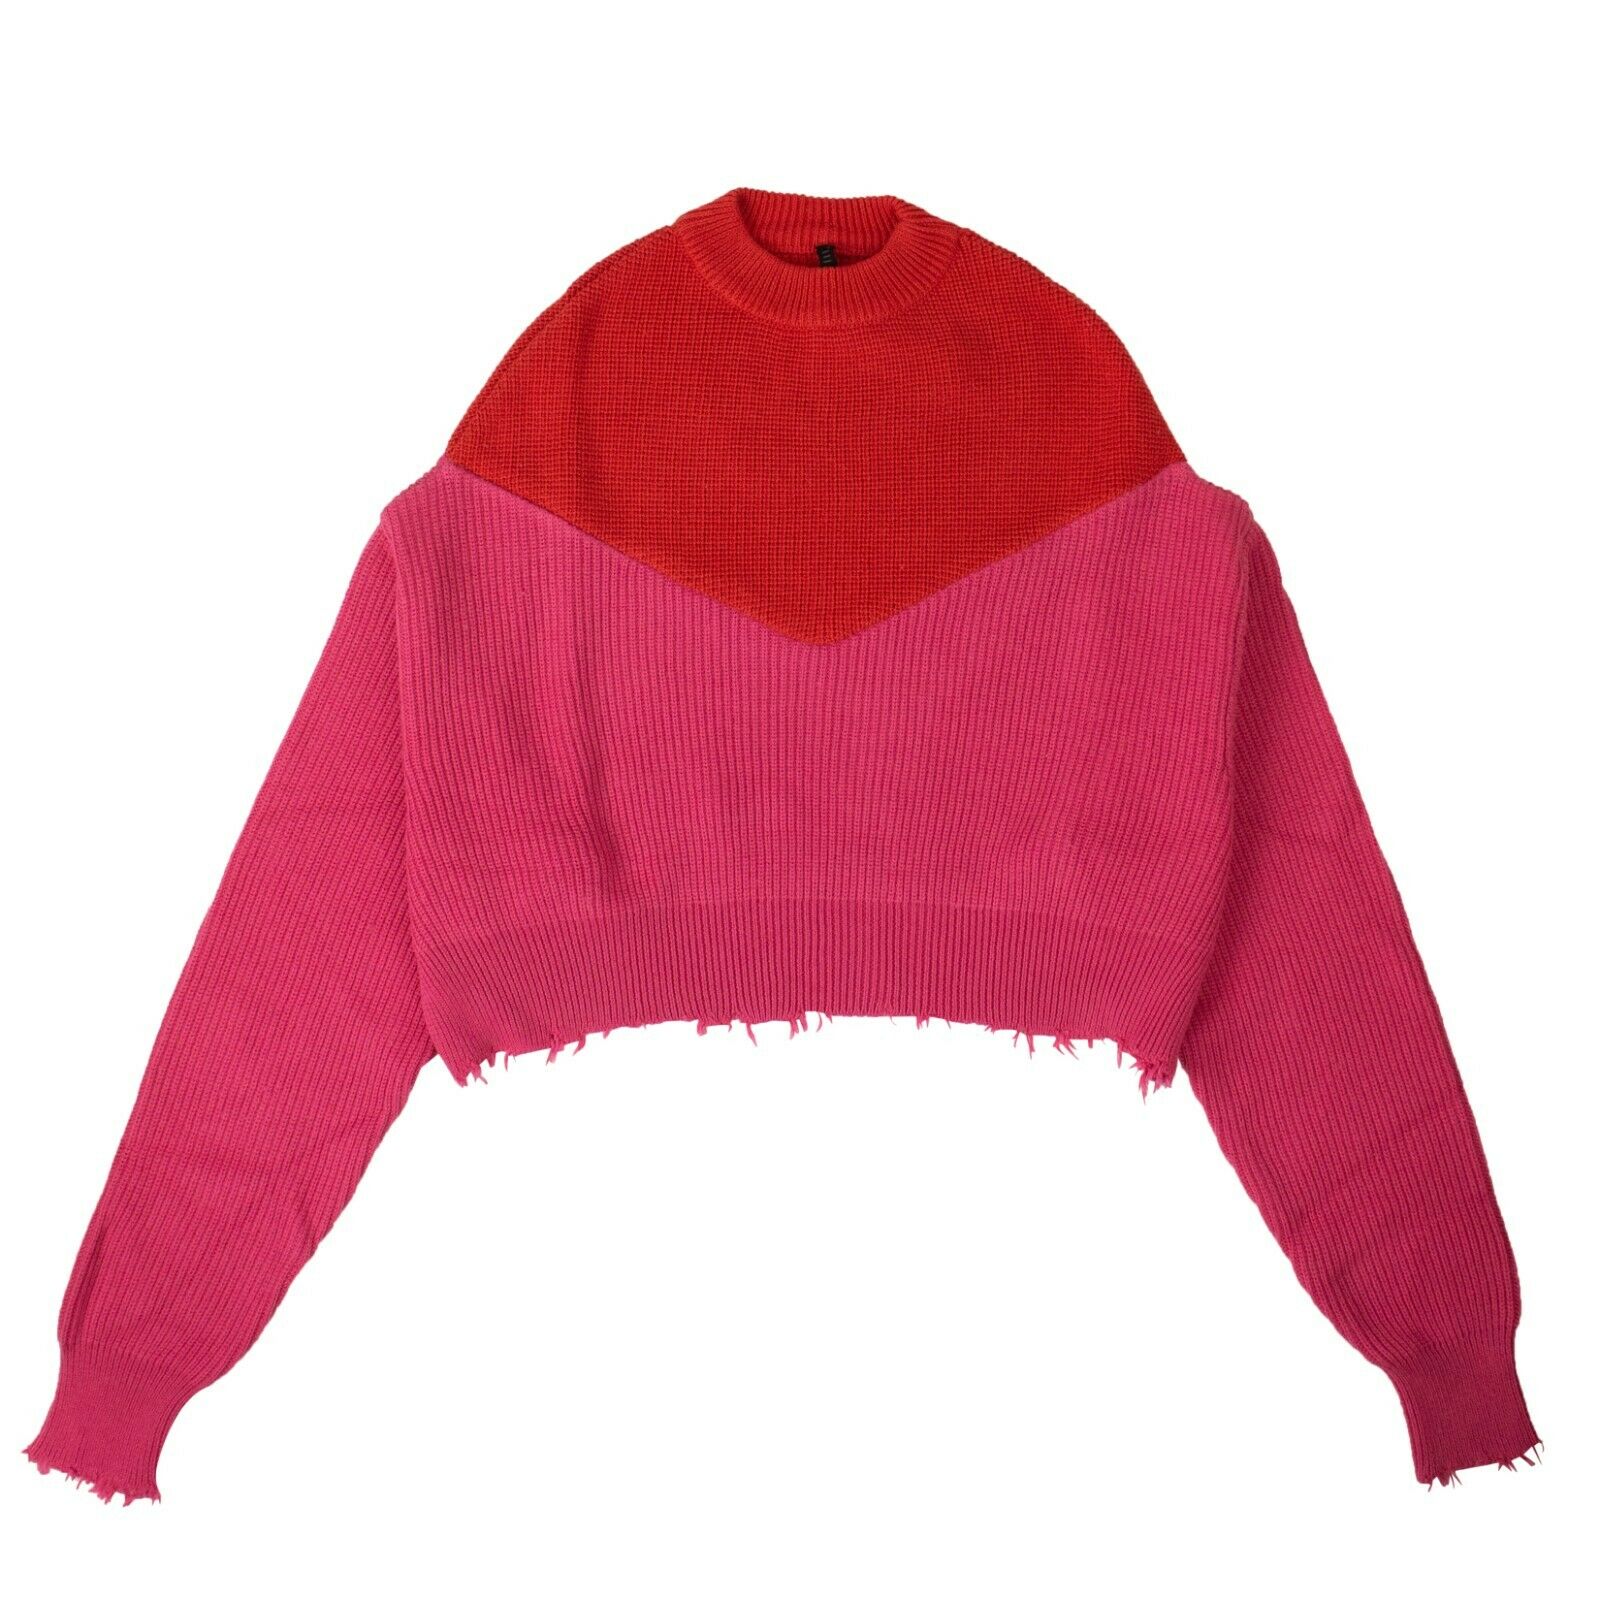 Ben Taverniti Unravel Project Distressed Hem Sweater - Red/pink